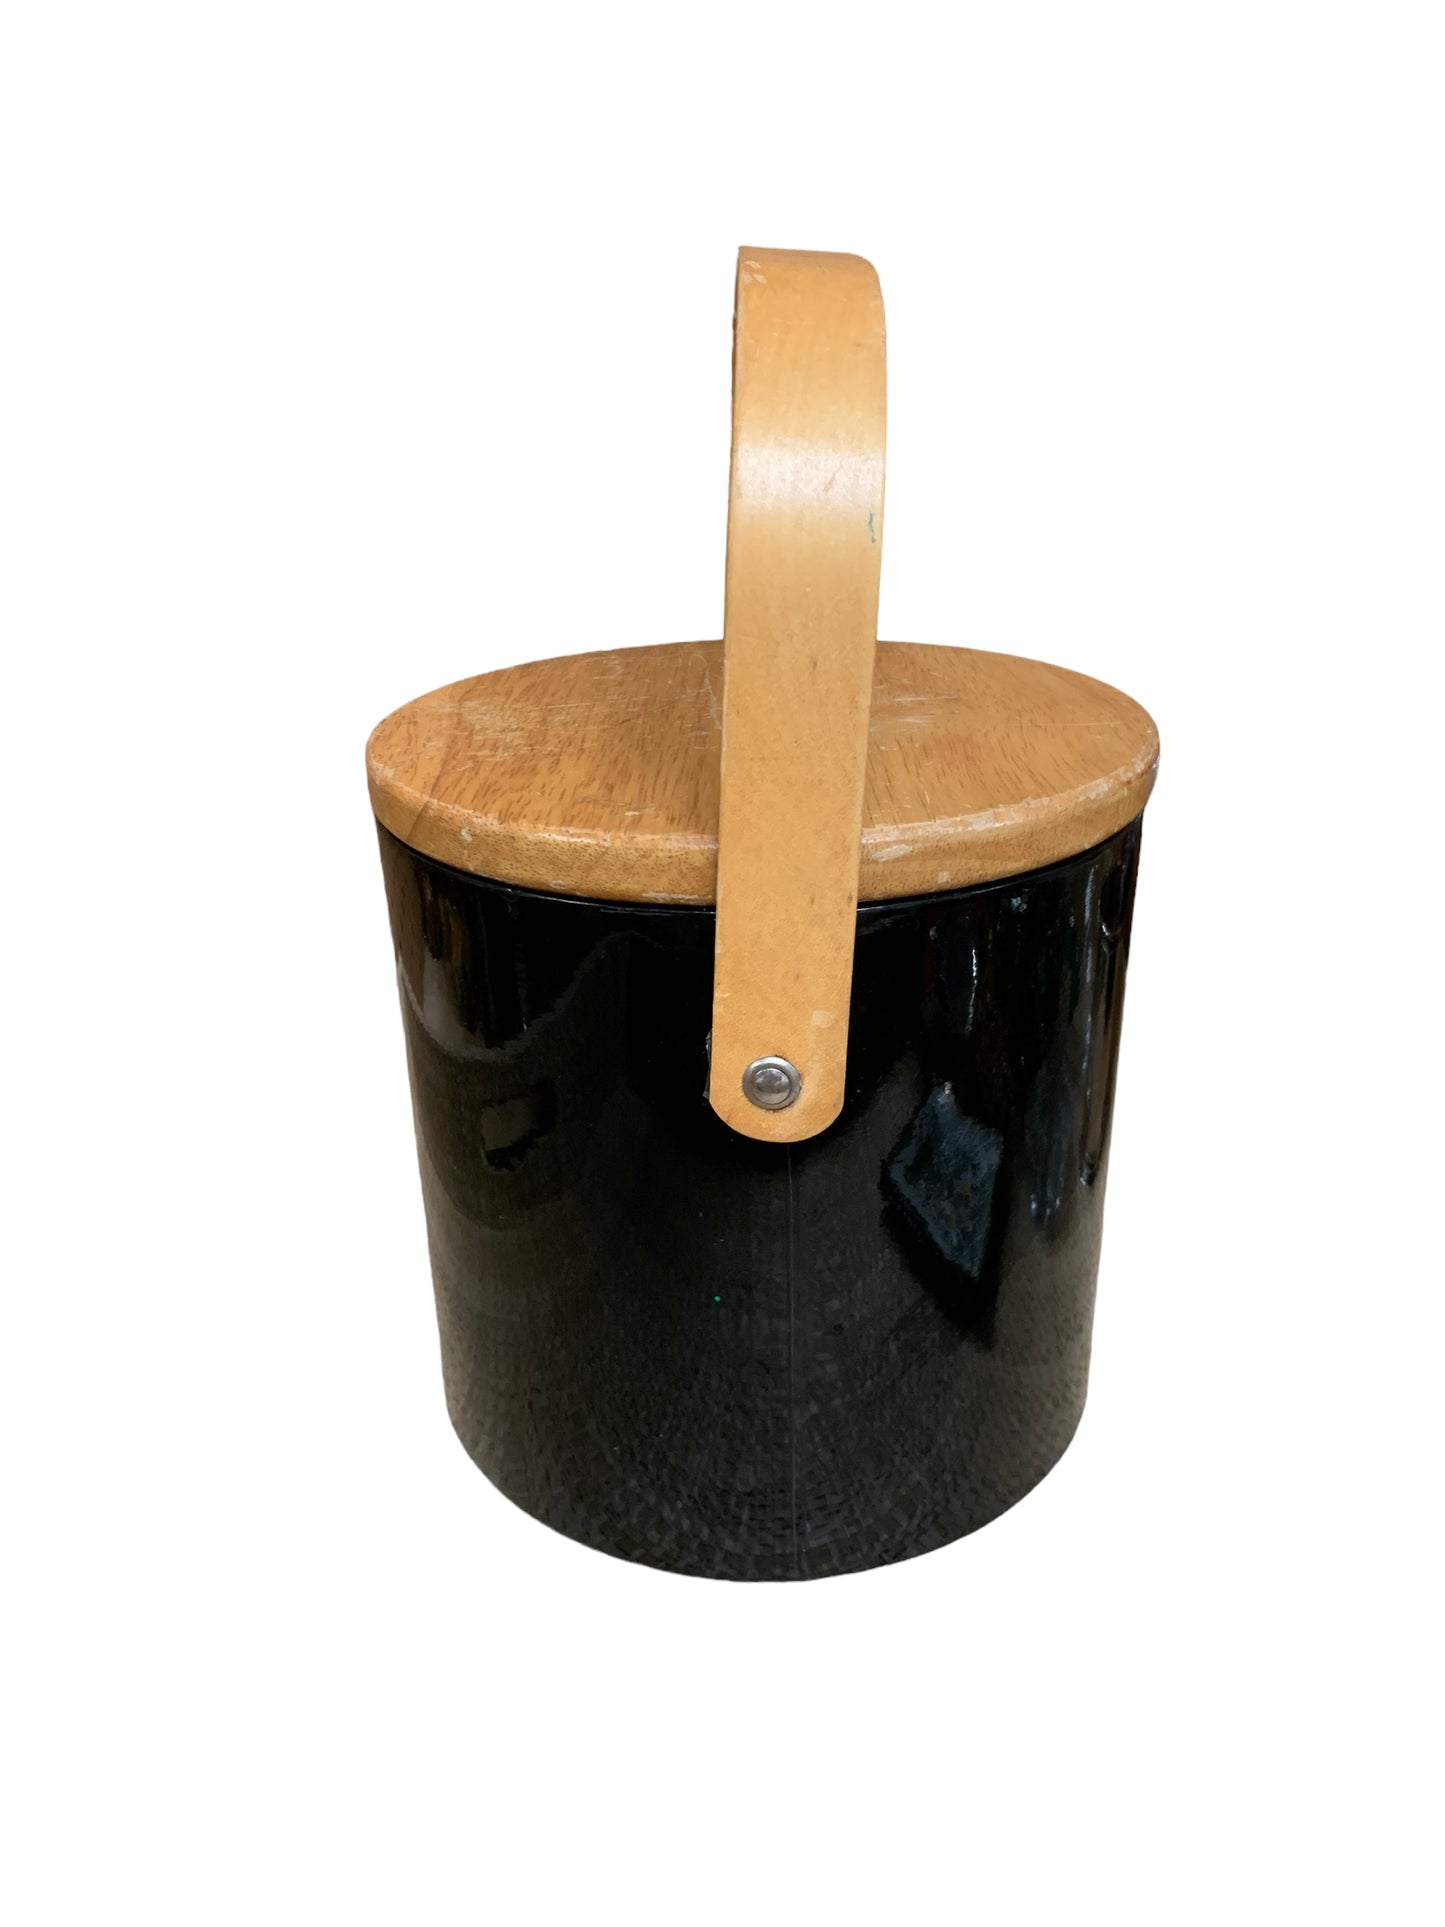 Table Top Vintage Georges Briard Ice Bucket Black Paten Vinyl, Butcher Block Lid & Handle